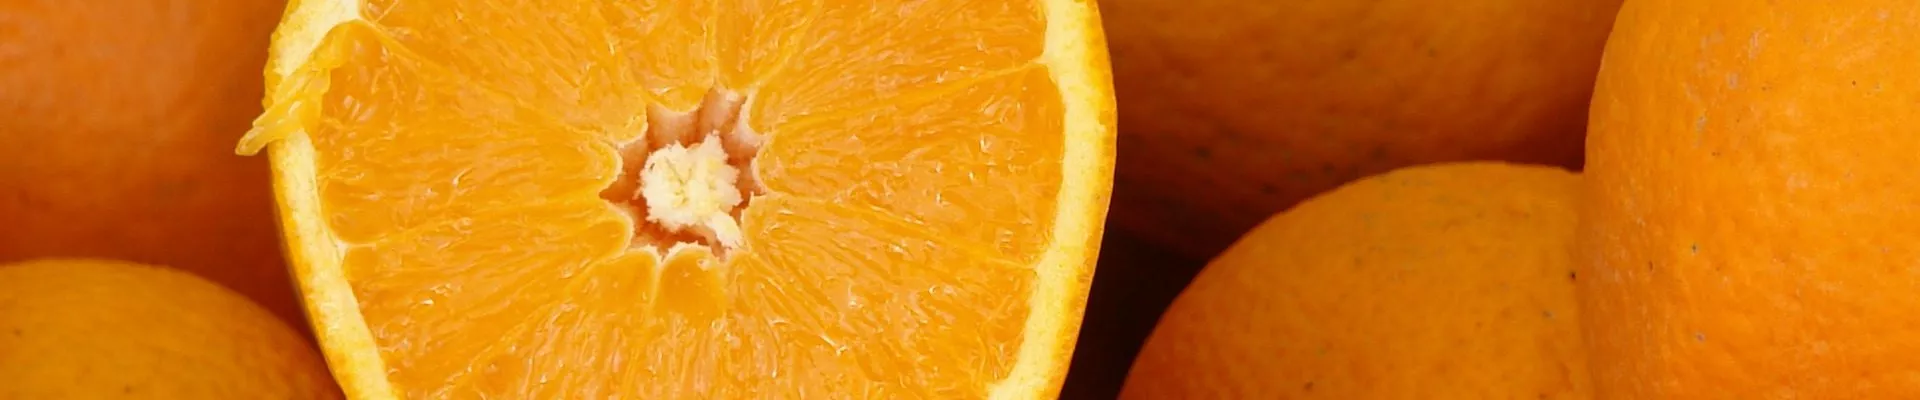 orange-a-jus